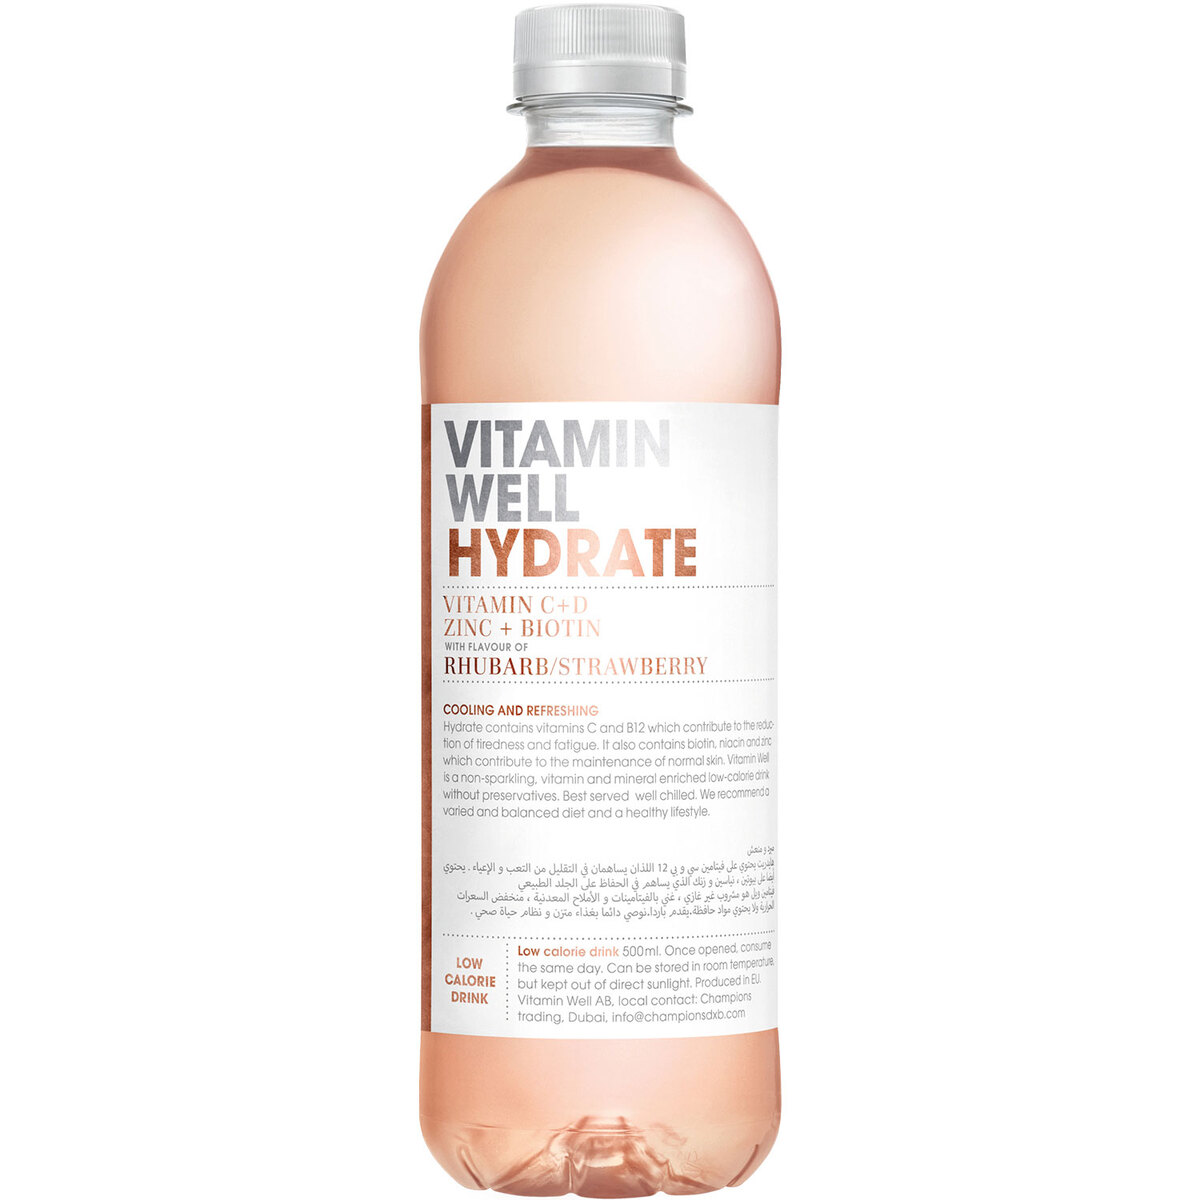 Vitamin Well Hydrate Rhubarb/Strawberry Drink 500 ml